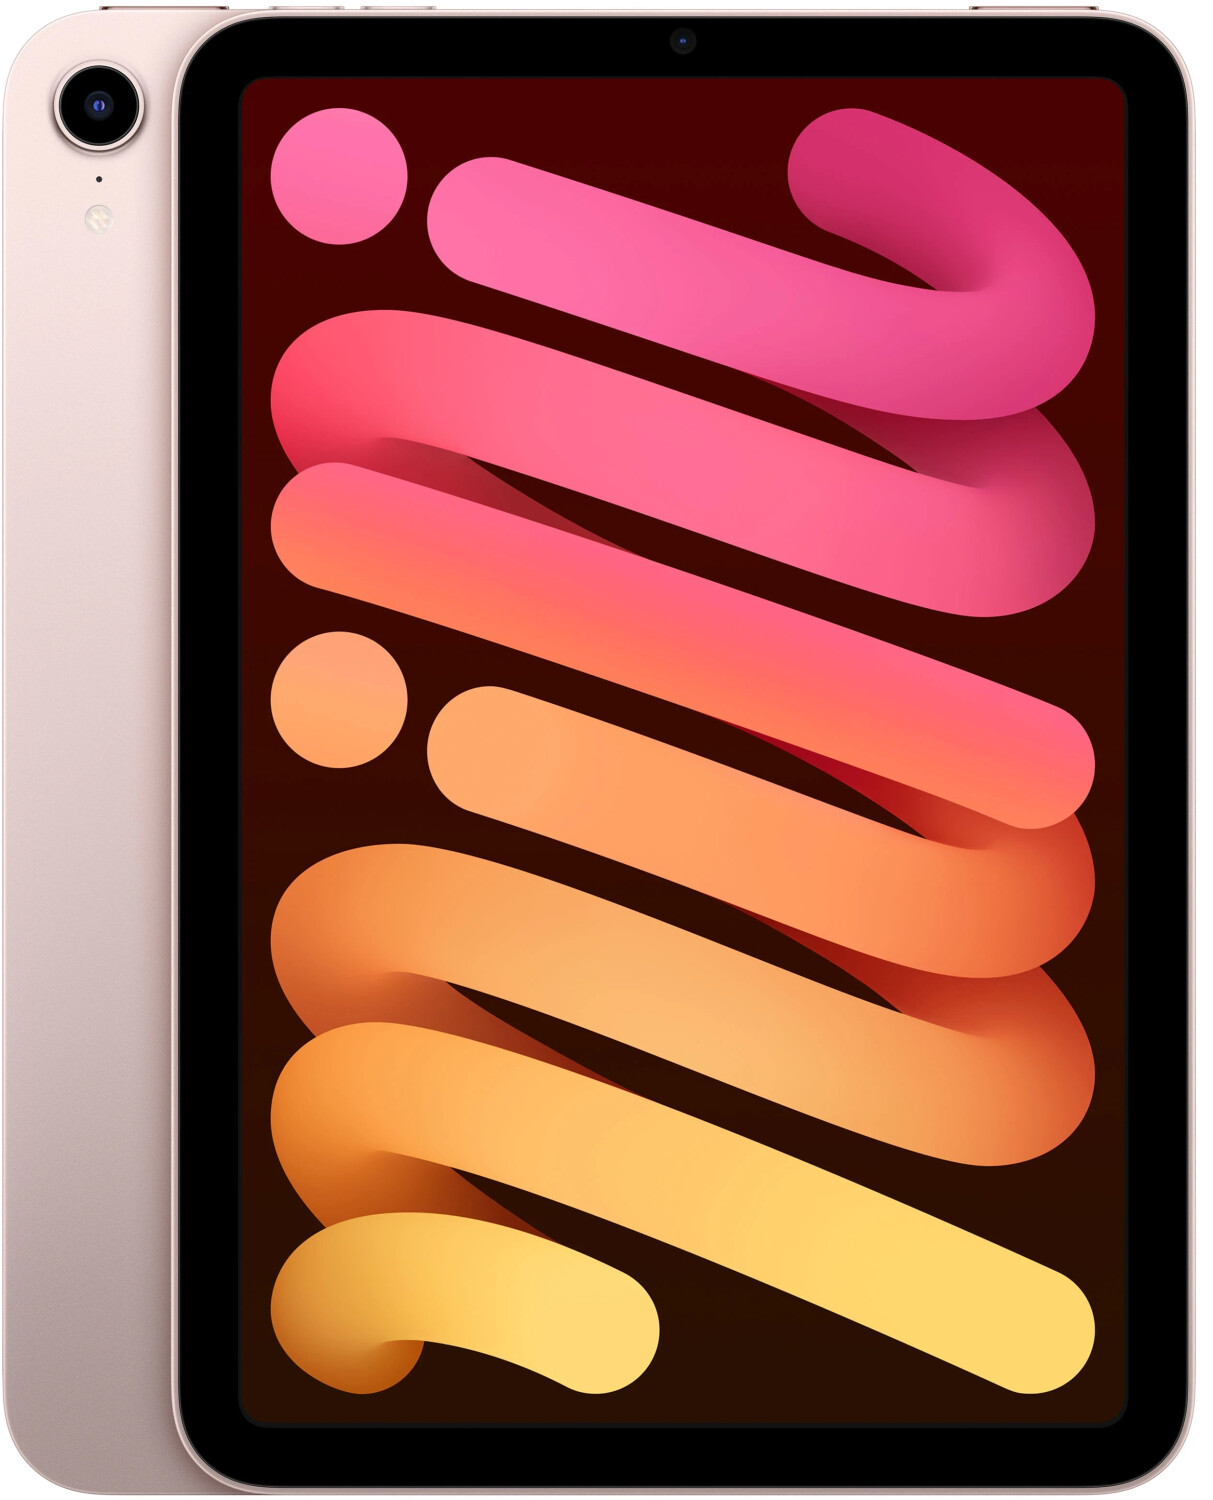 Apple iPad mini 64GB WiFi rosé (2021) ab 555,65 € | Preisvergleich 